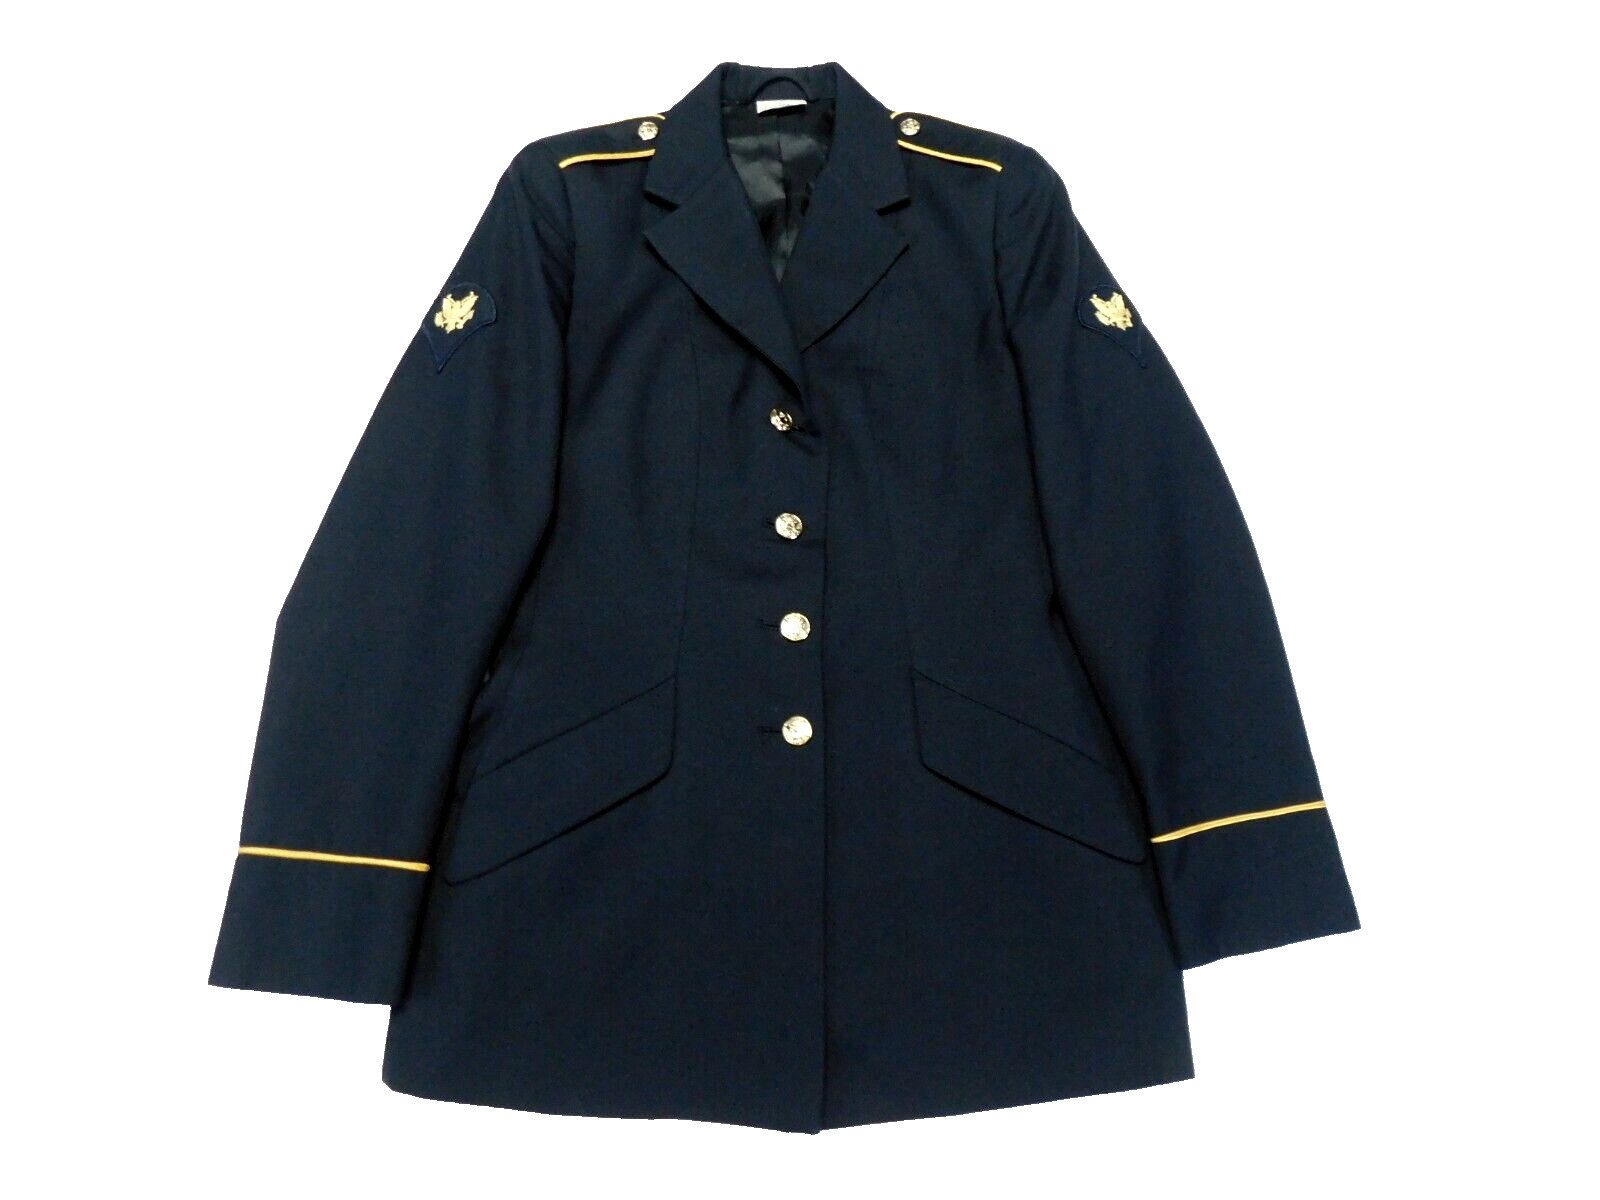 US Army ASU Coat 10 MR Women's Dress Blue 450 Poly/Wool Classic Service Jacket